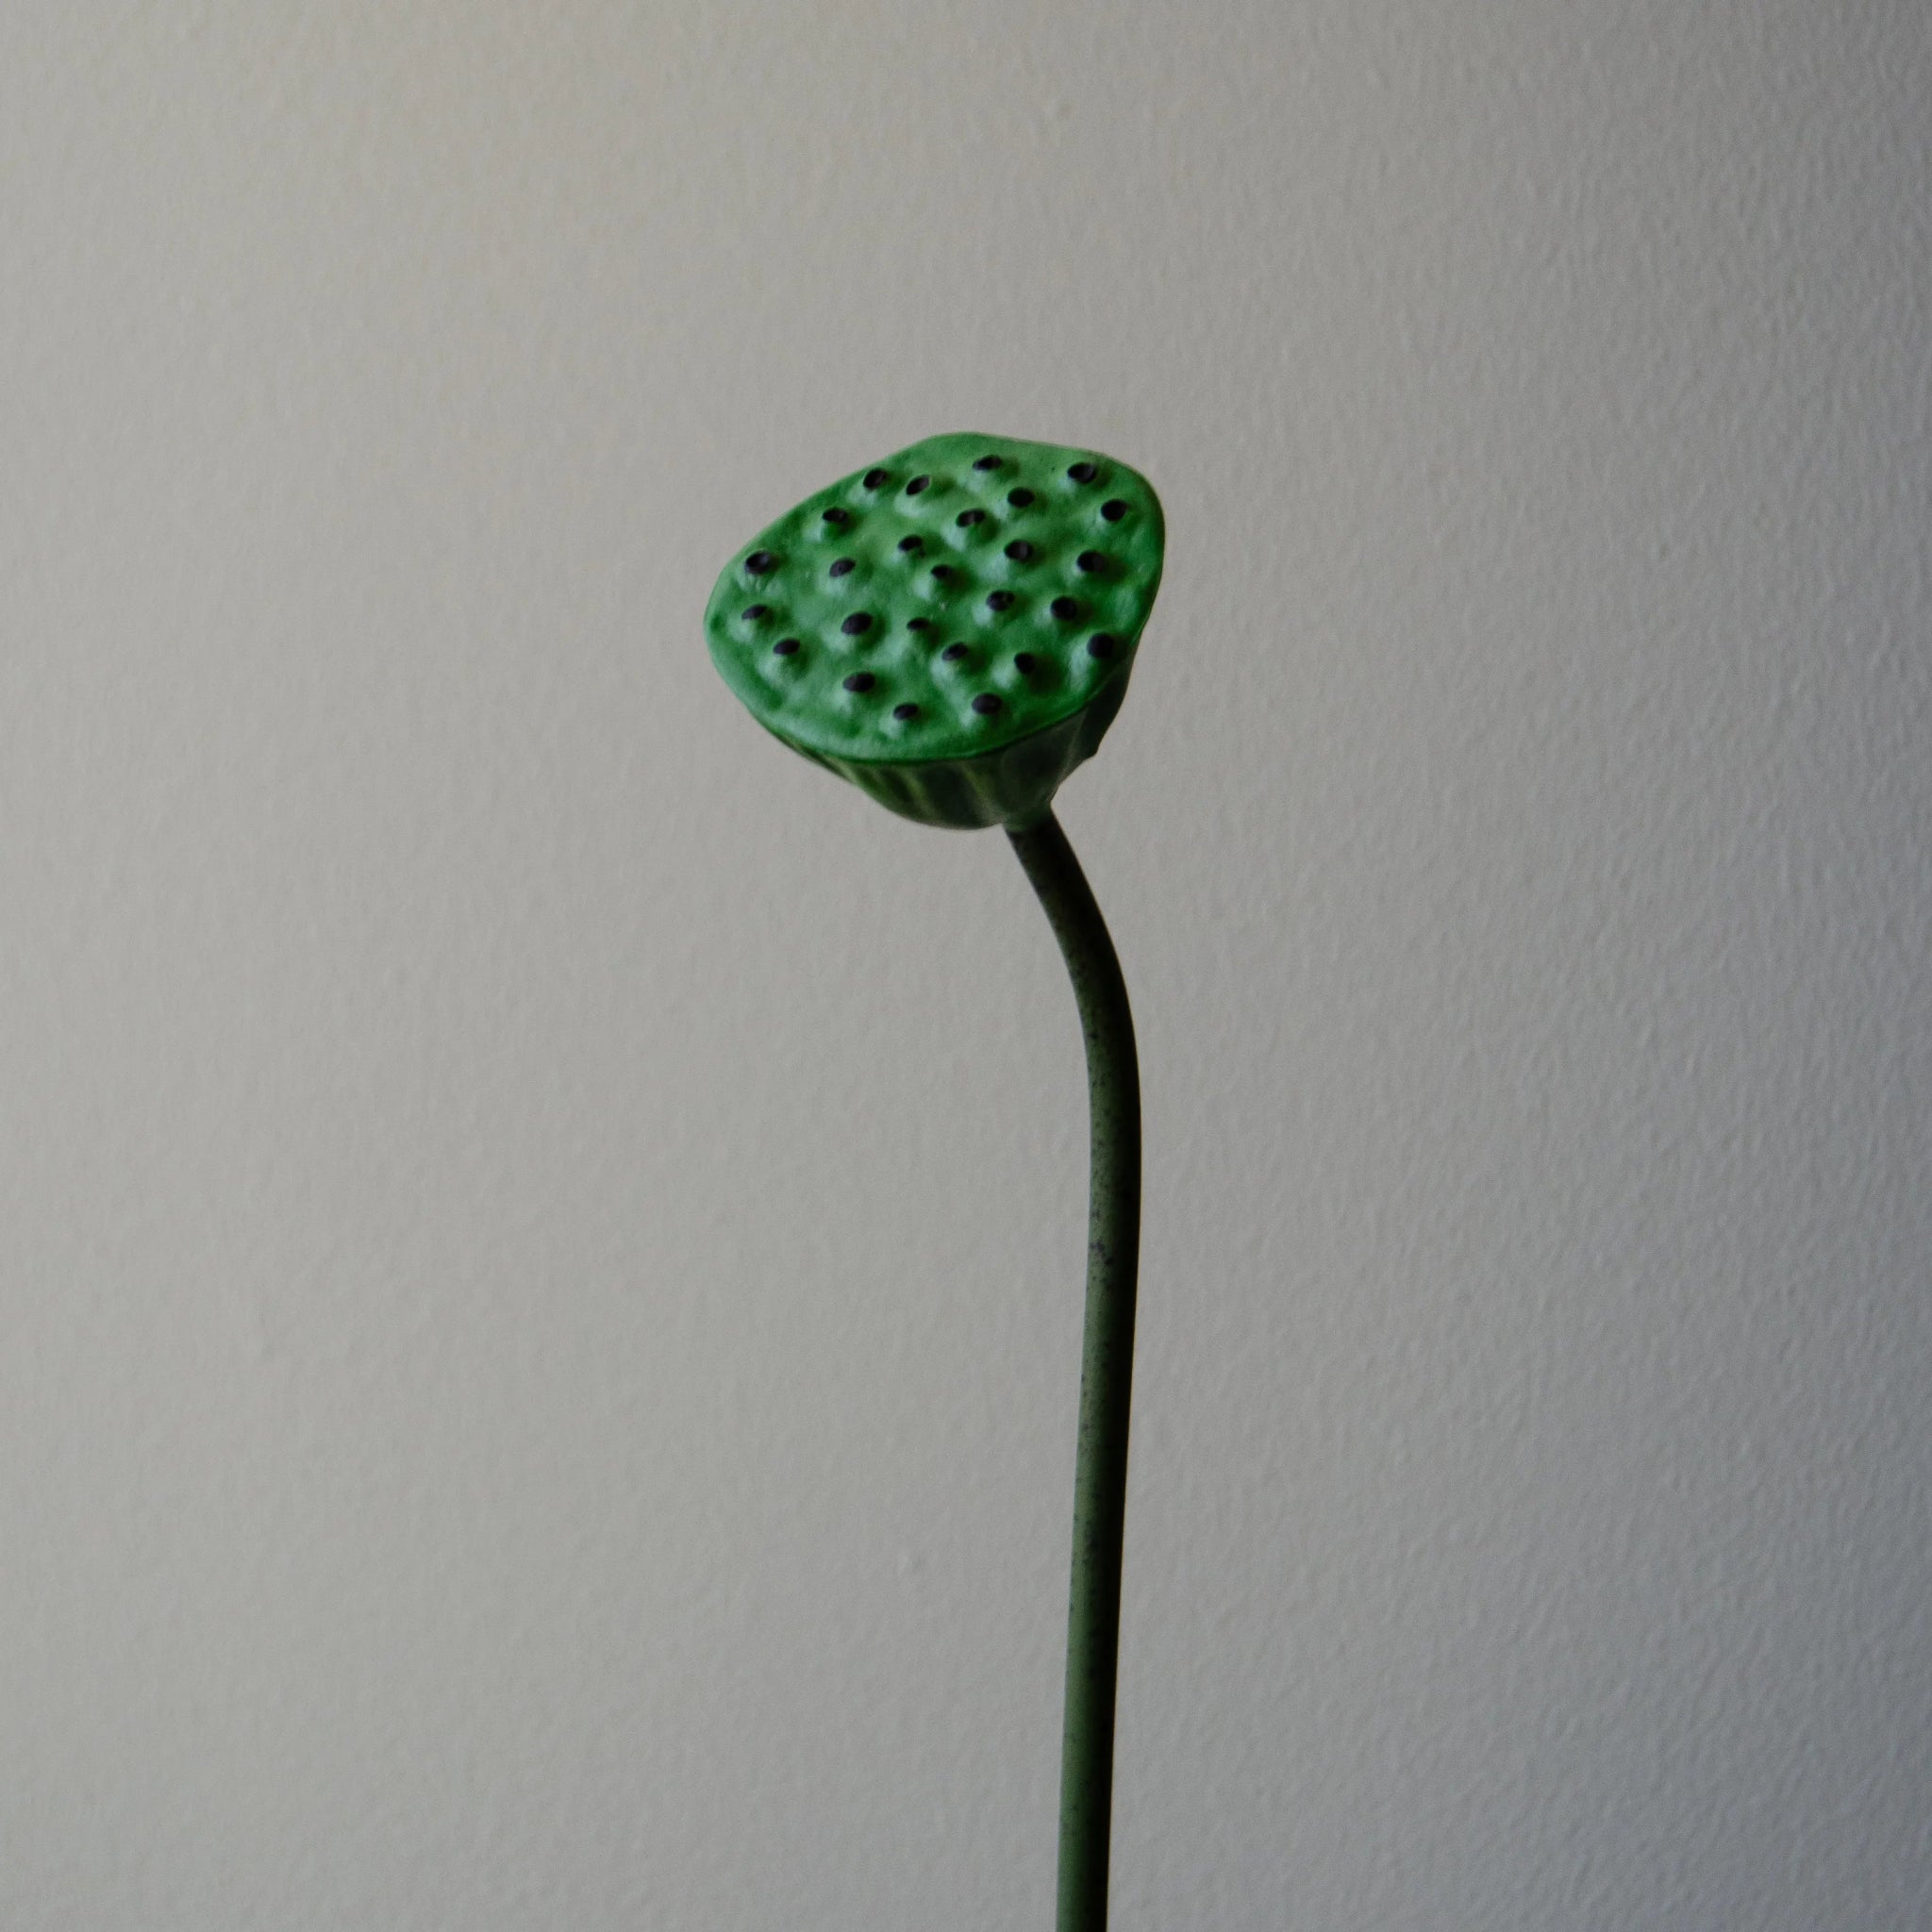 Artificial Lotus Seedpod Flower from Botané